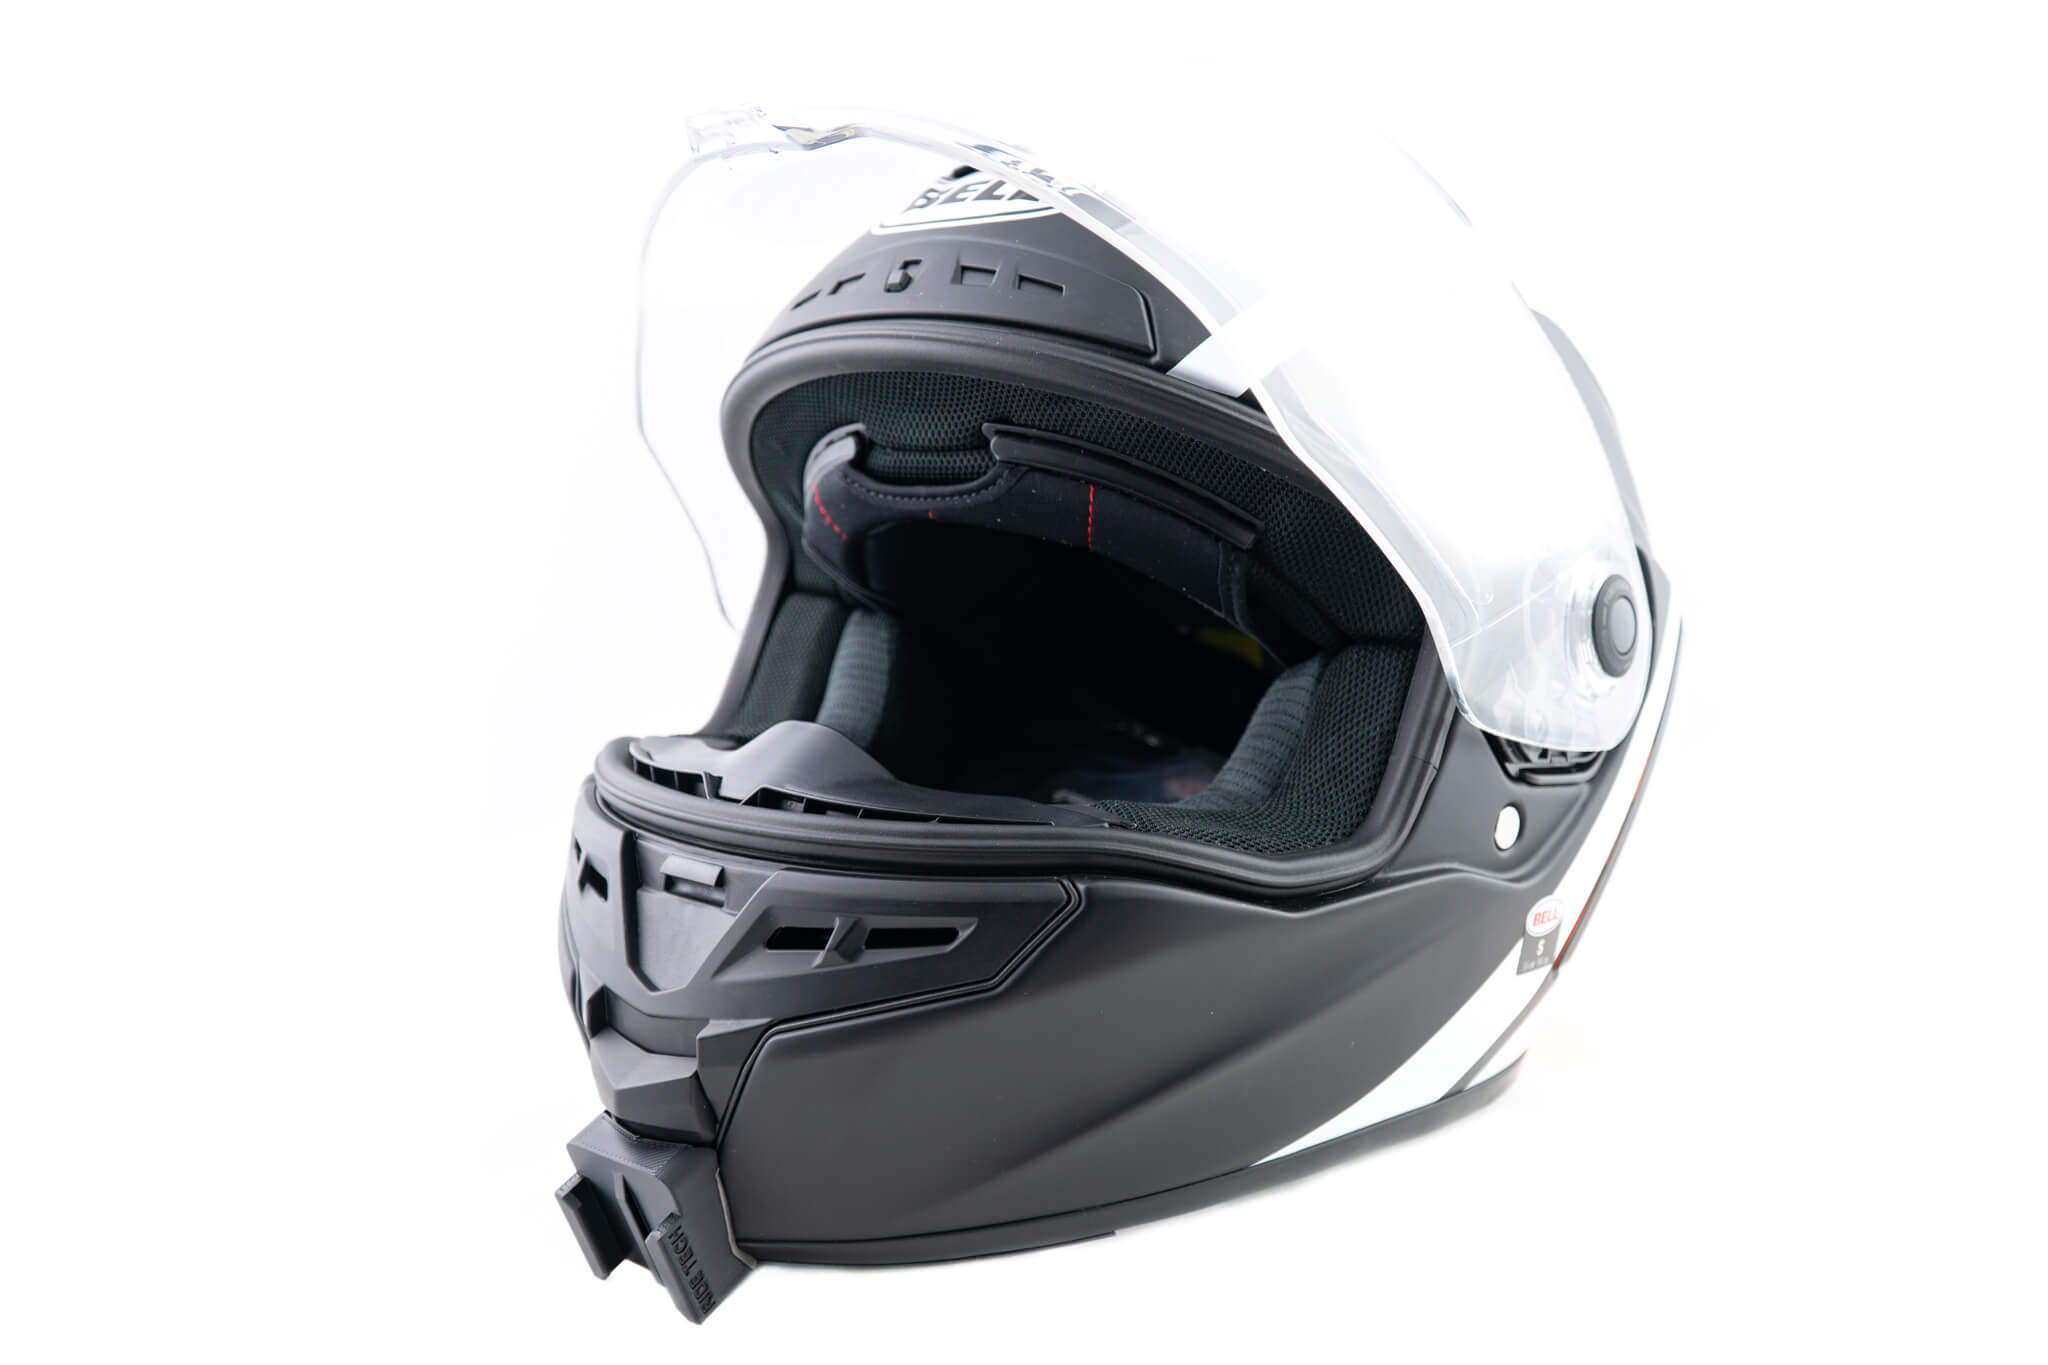 Lateral GoPro motorcycle helmet mount.